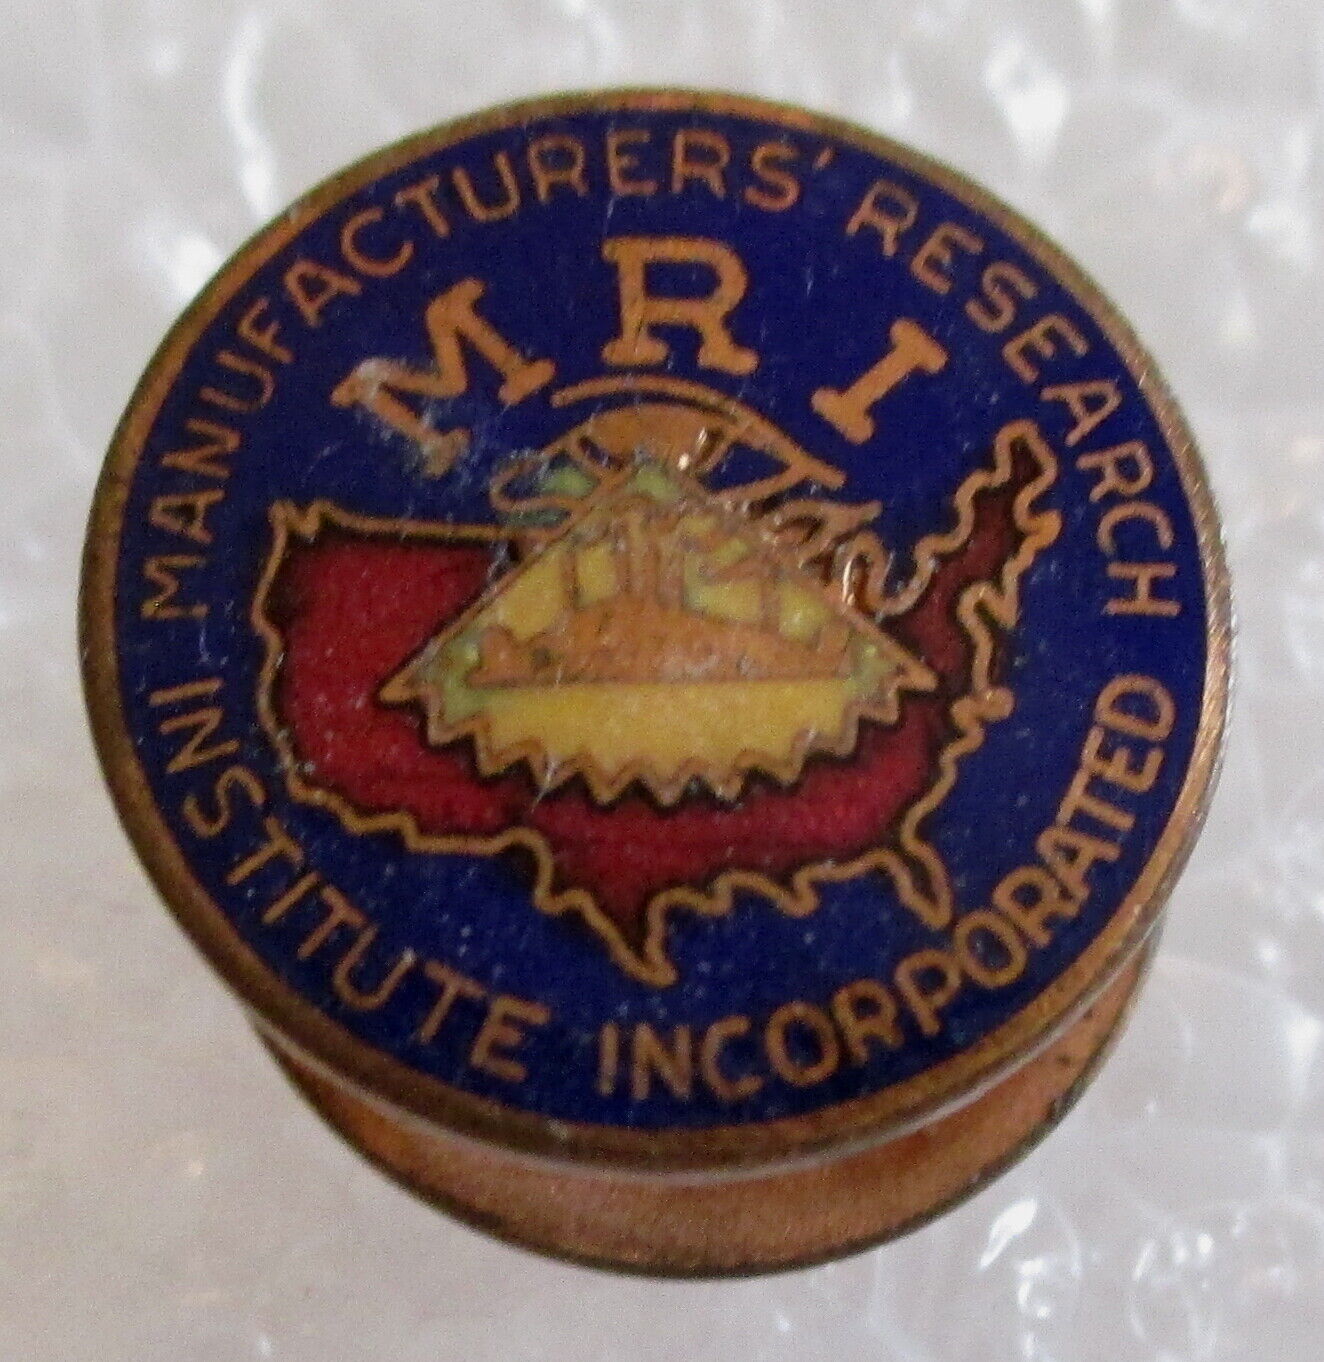 Vintage Manufacturers' Research Institute Incorporated MRI Member Lapel Pin